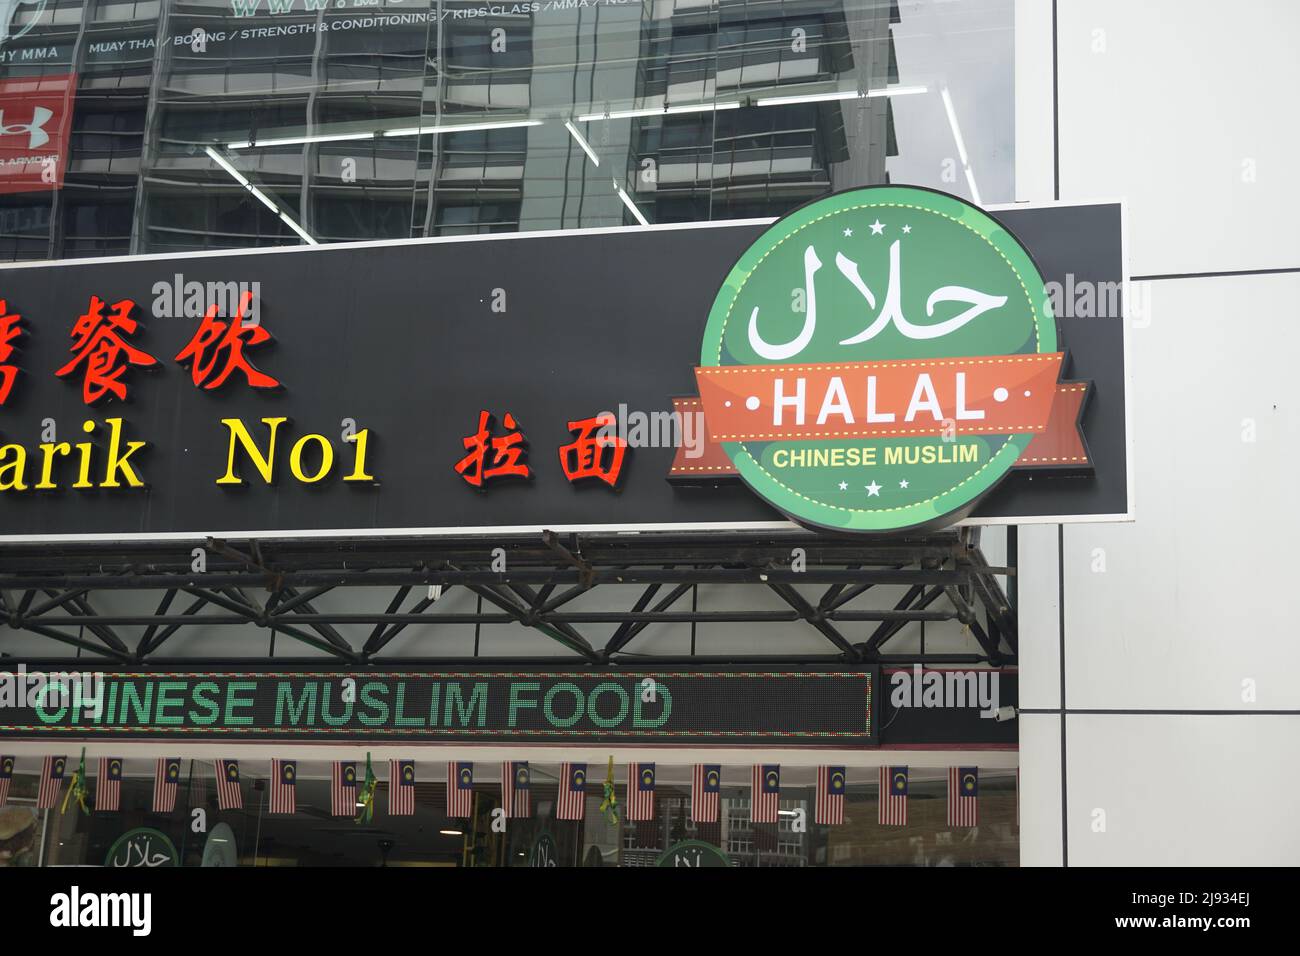 Halal chinesisch-muslimisches Restaurant in Kuala Lumpur, Malaysia Stockfoto